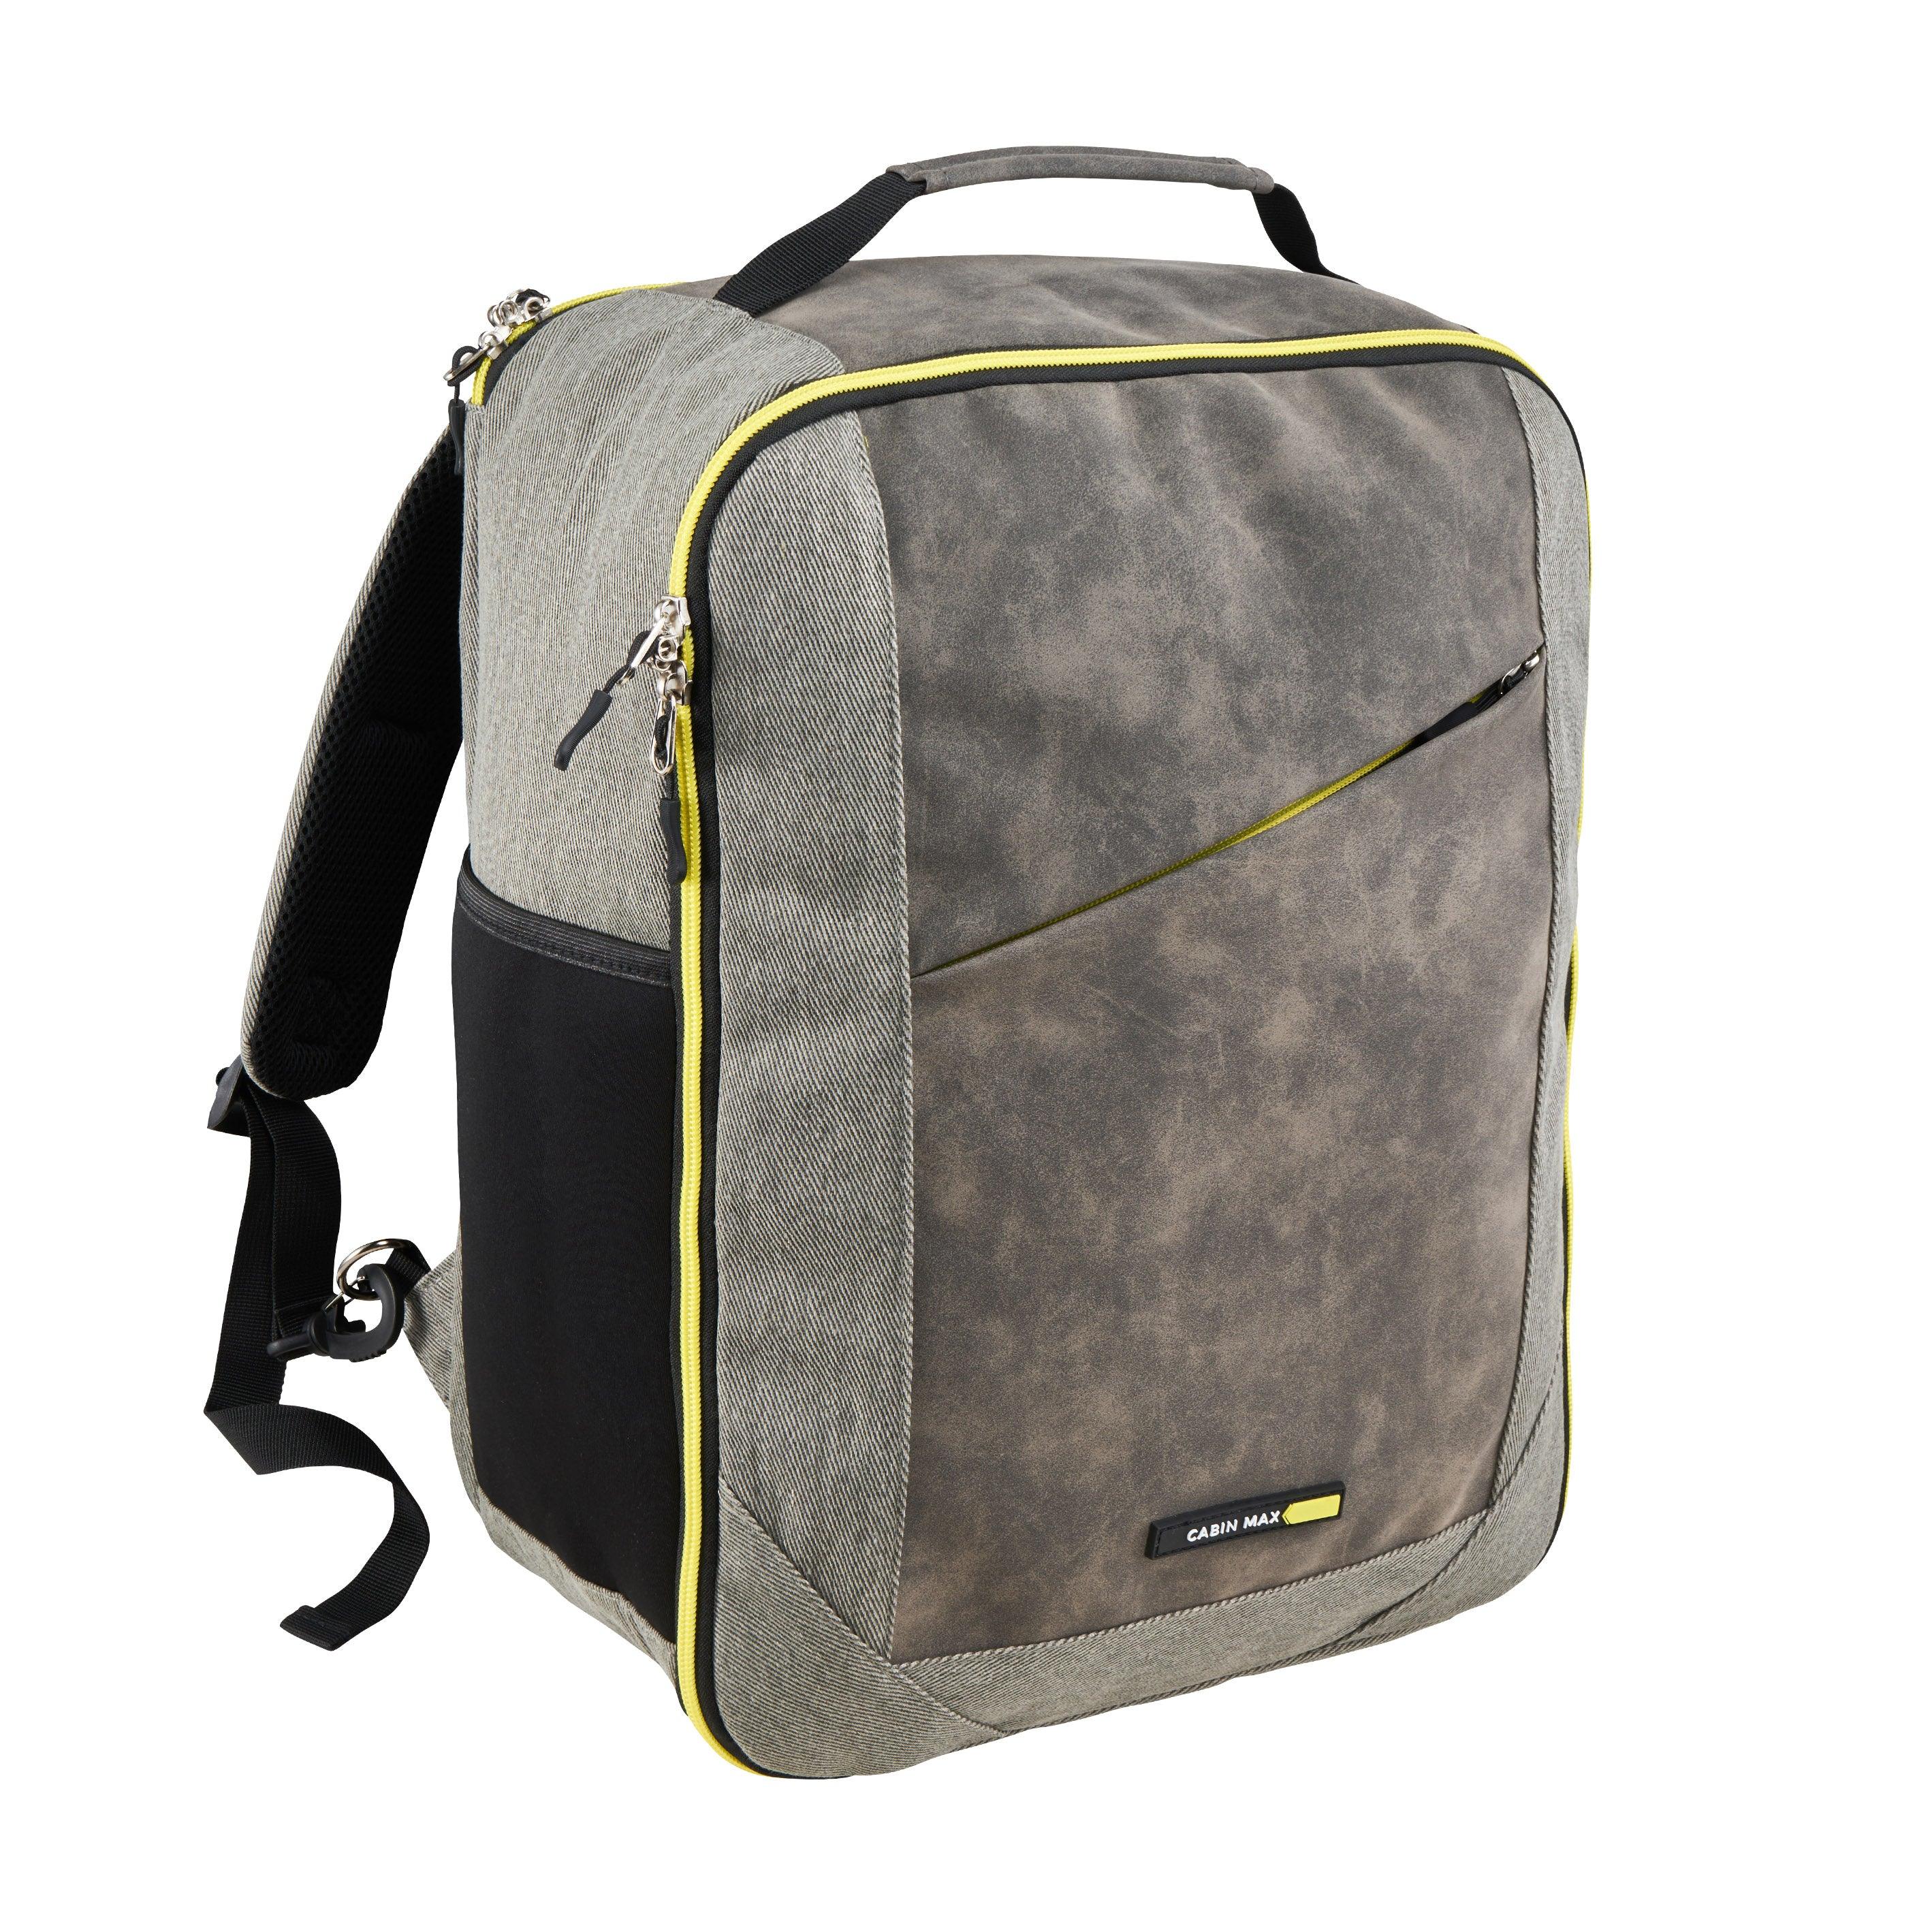 Cabin Maximum 45x36x20 cm EasyJet Under Seat Travel Case Hand Luggage  Backpack